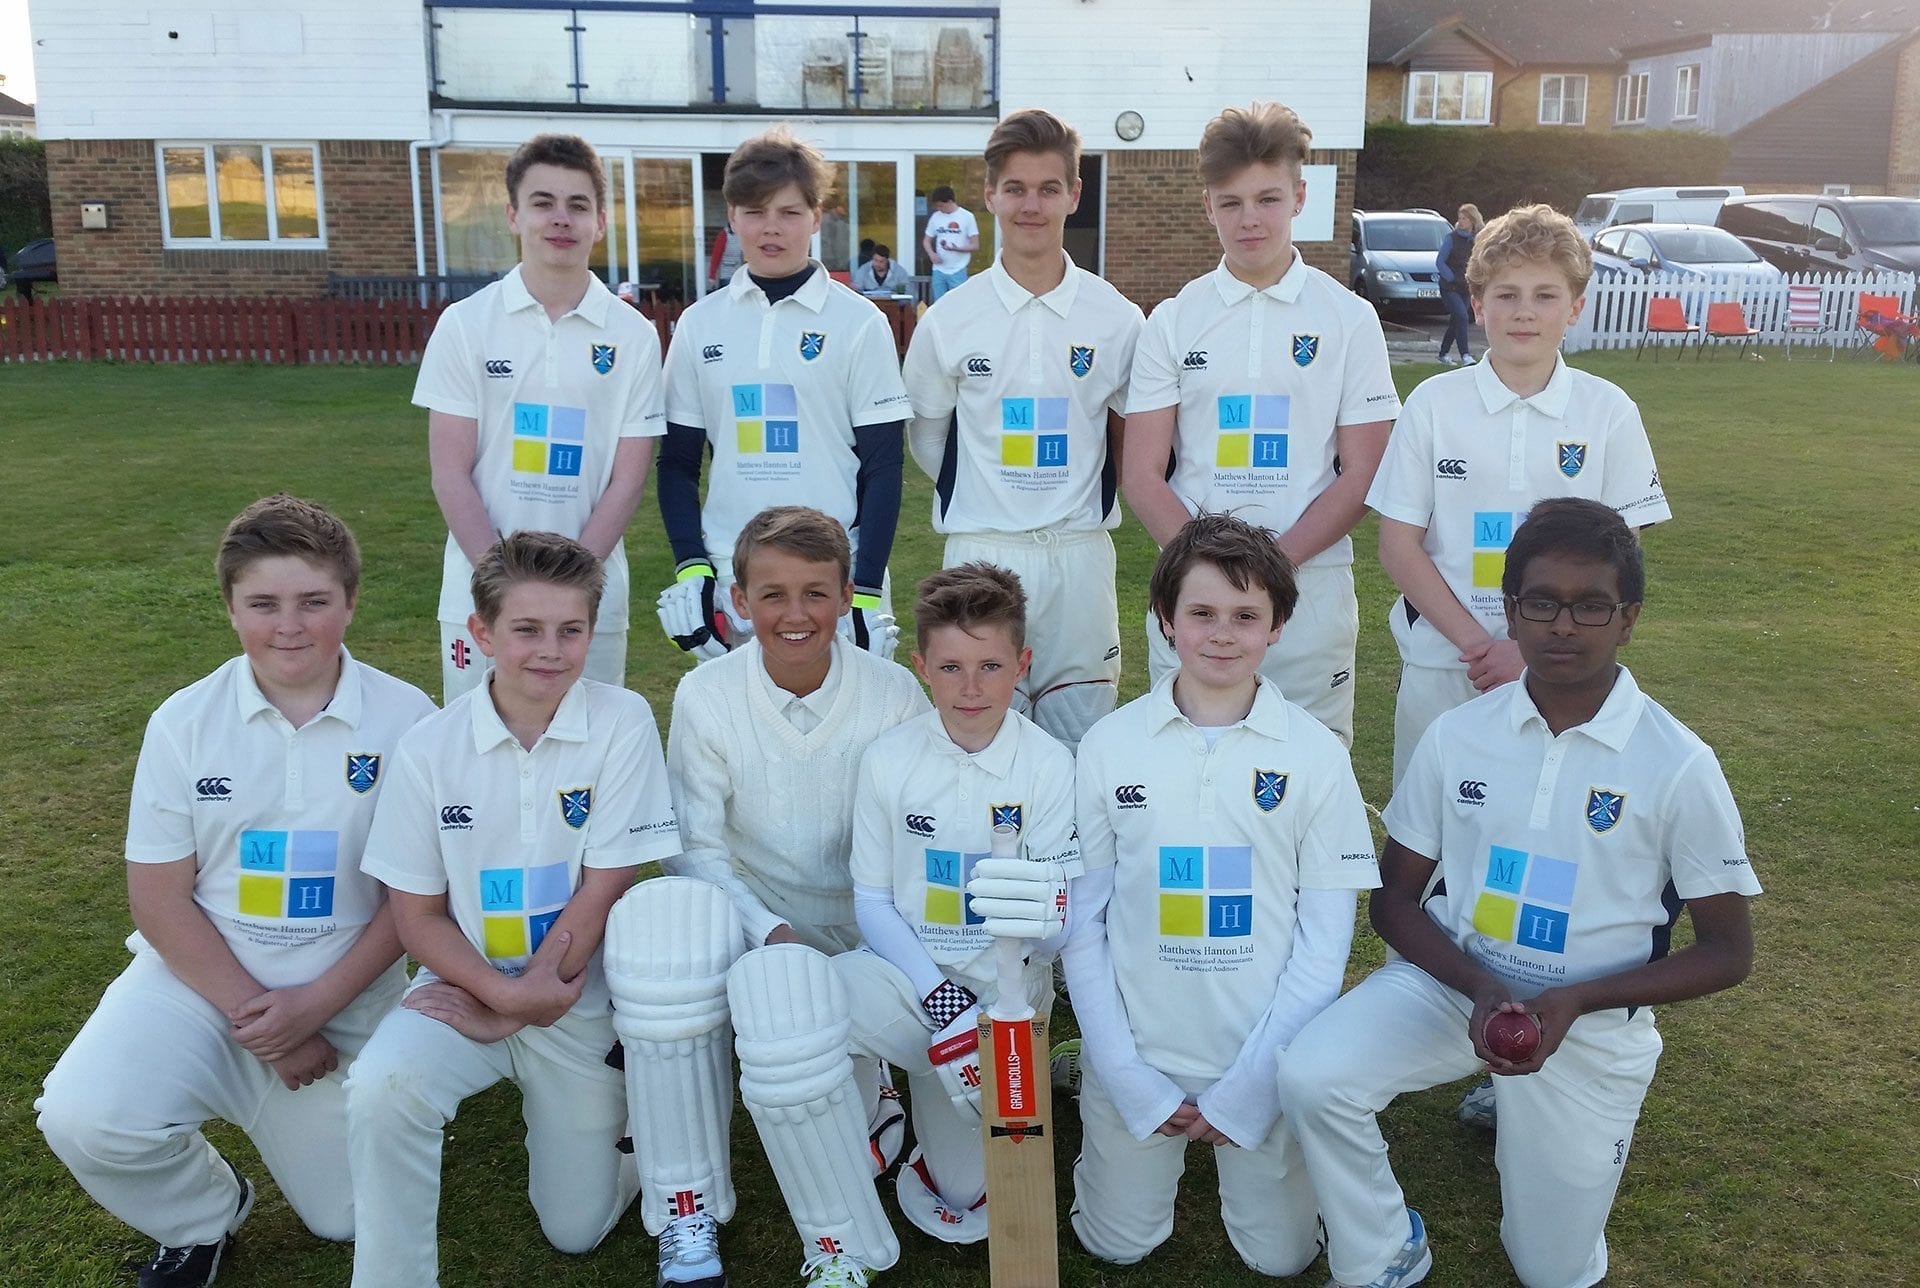 Cricket team sponsored by Matthews Hanton